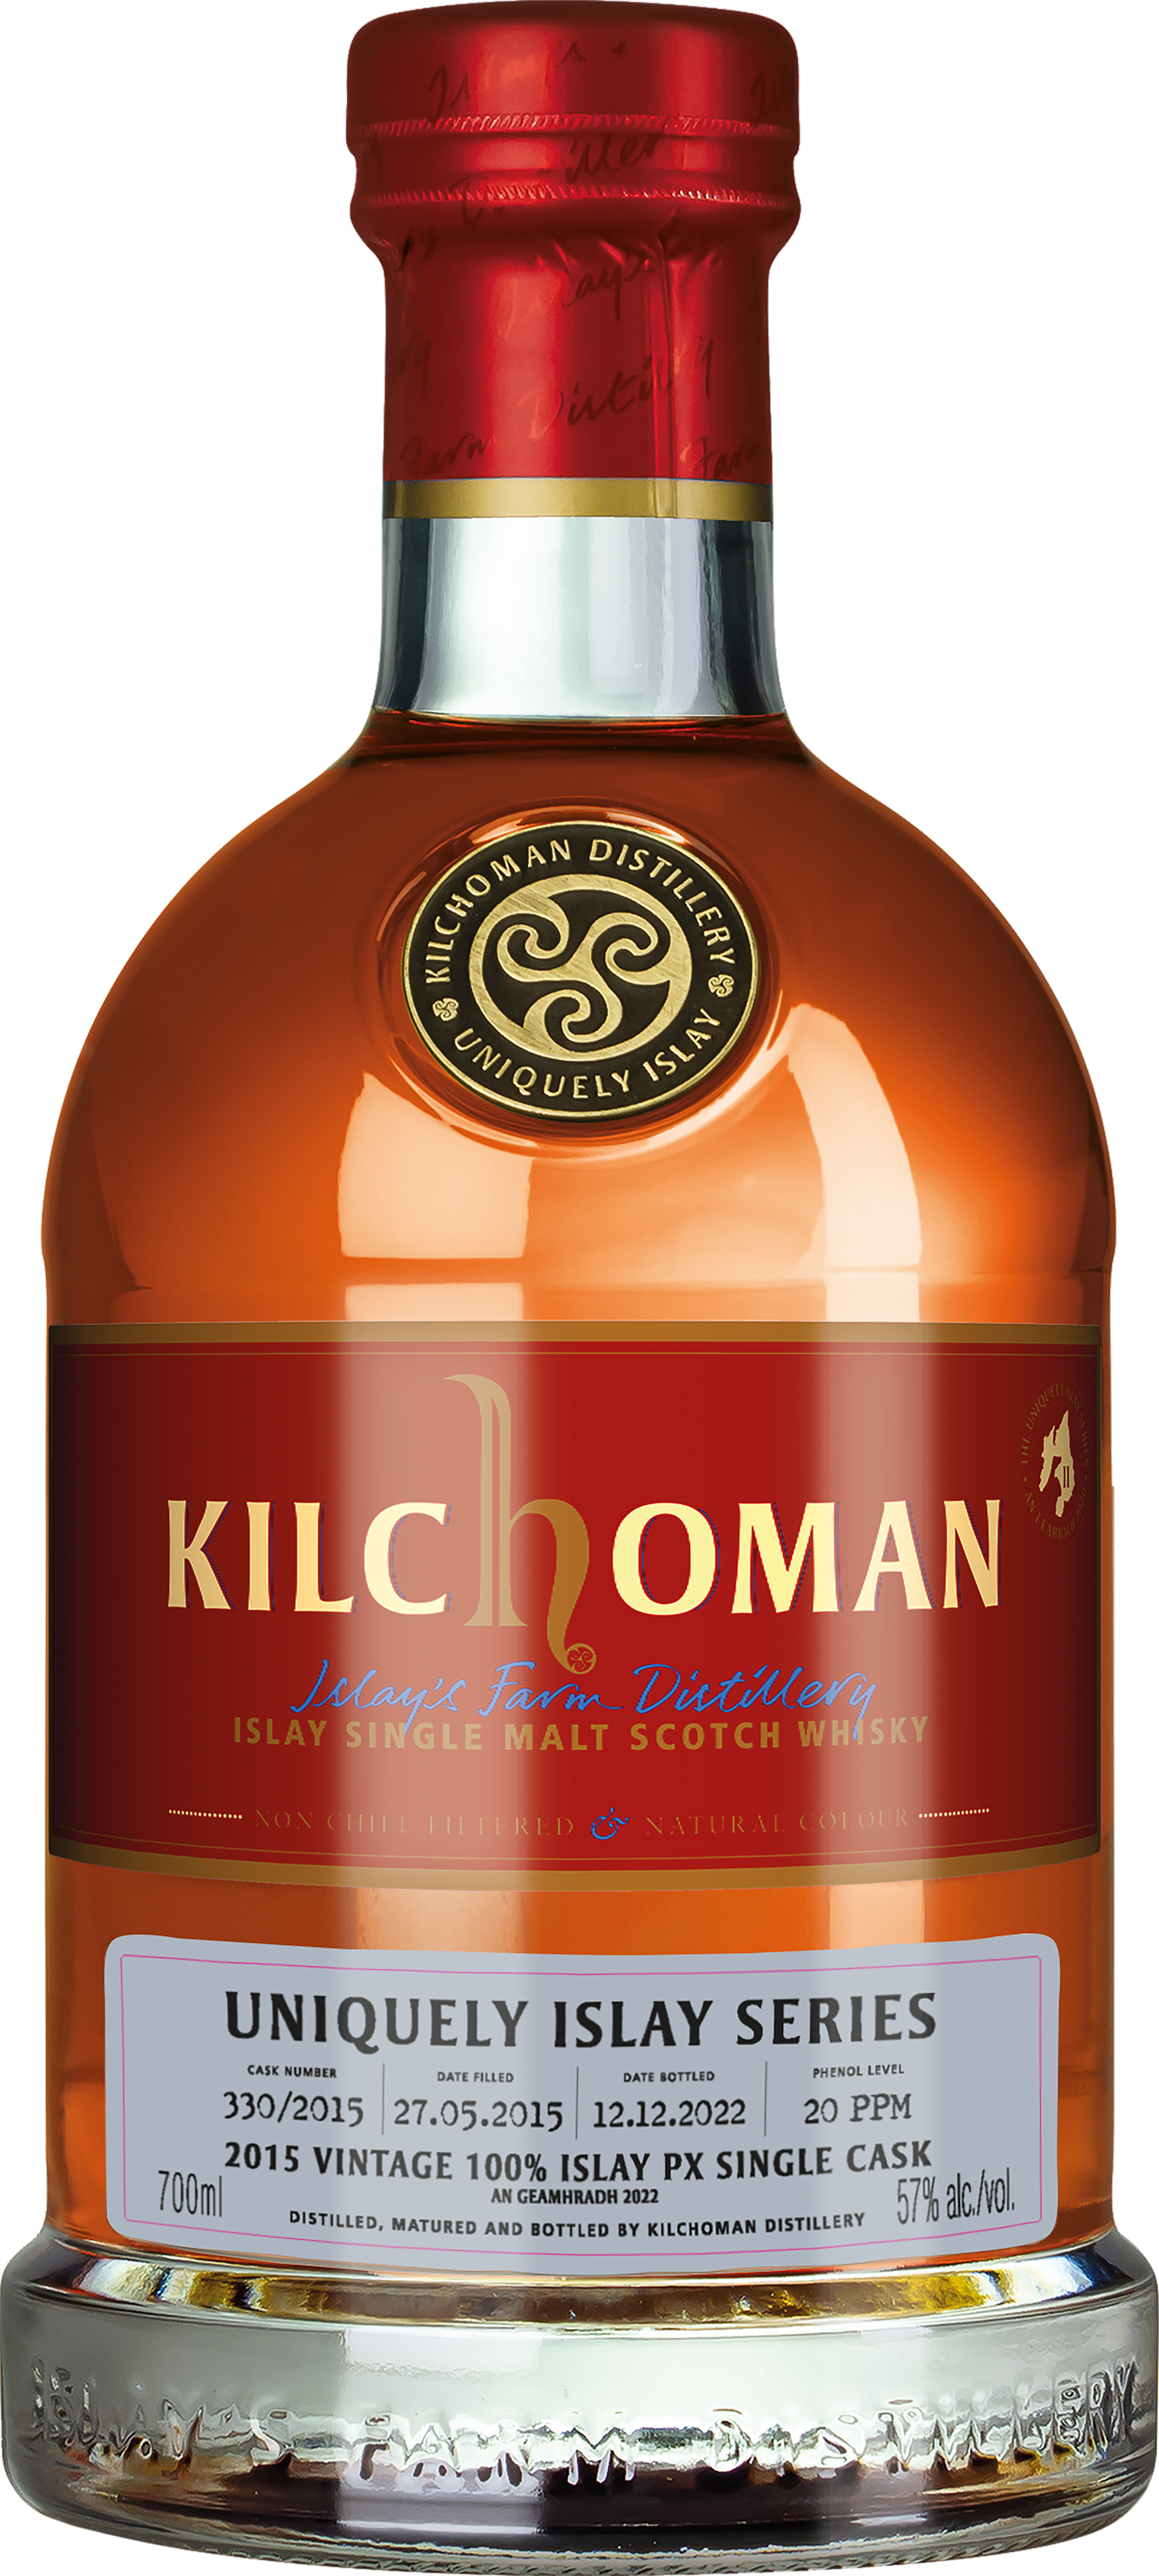 Kilchoman Uniquely Islay Series - 2015 Vintage 100 % Islay PX Single Cask